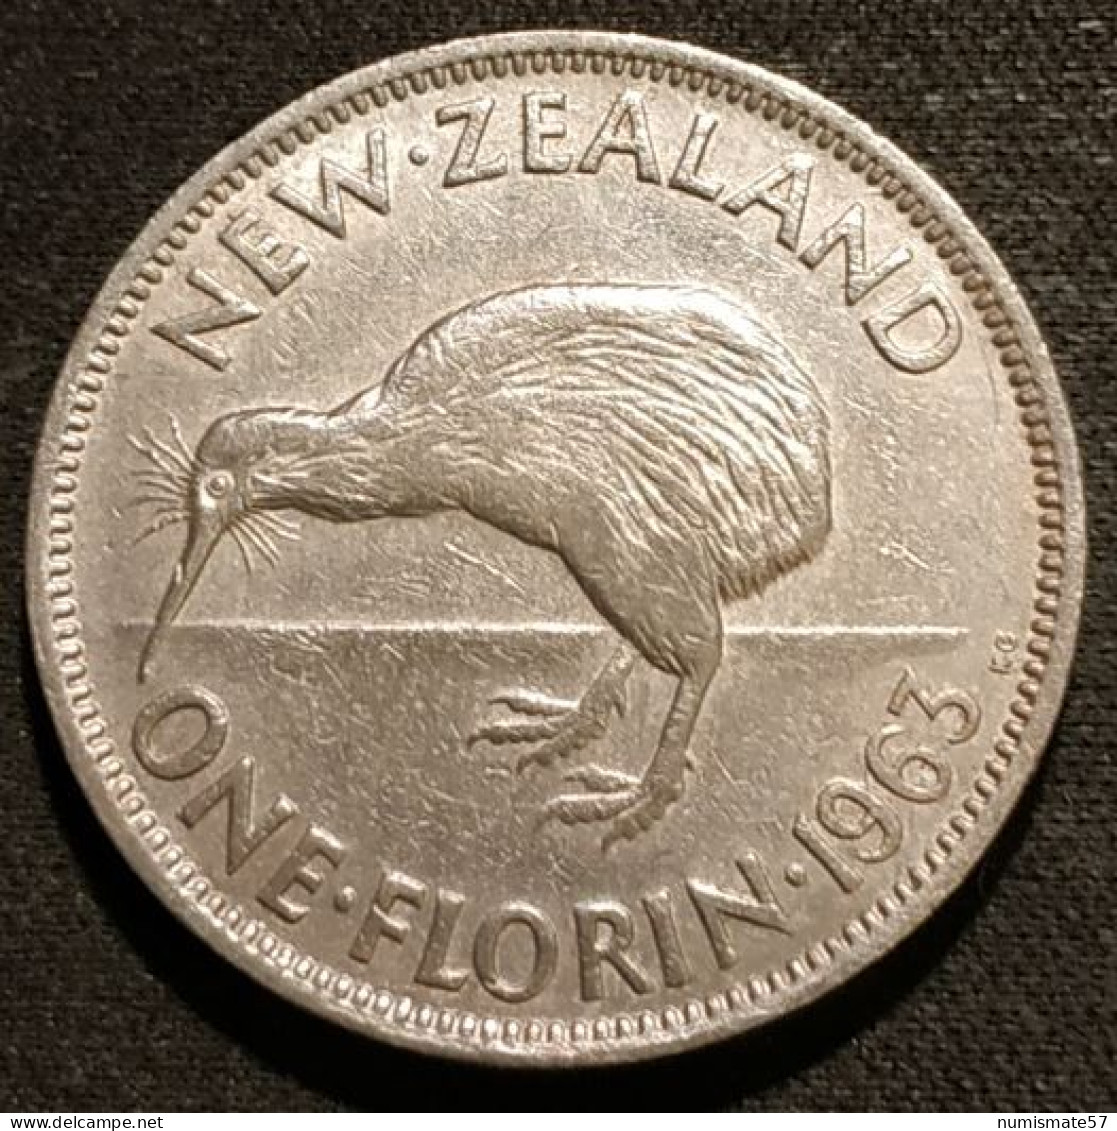 RARE - NOUVELLE ZELANDE - NEW ZEALAND - ONE - 1 FLORIN 1963 - Elisabeth II - KM 28.2 - Nuova Zelanda